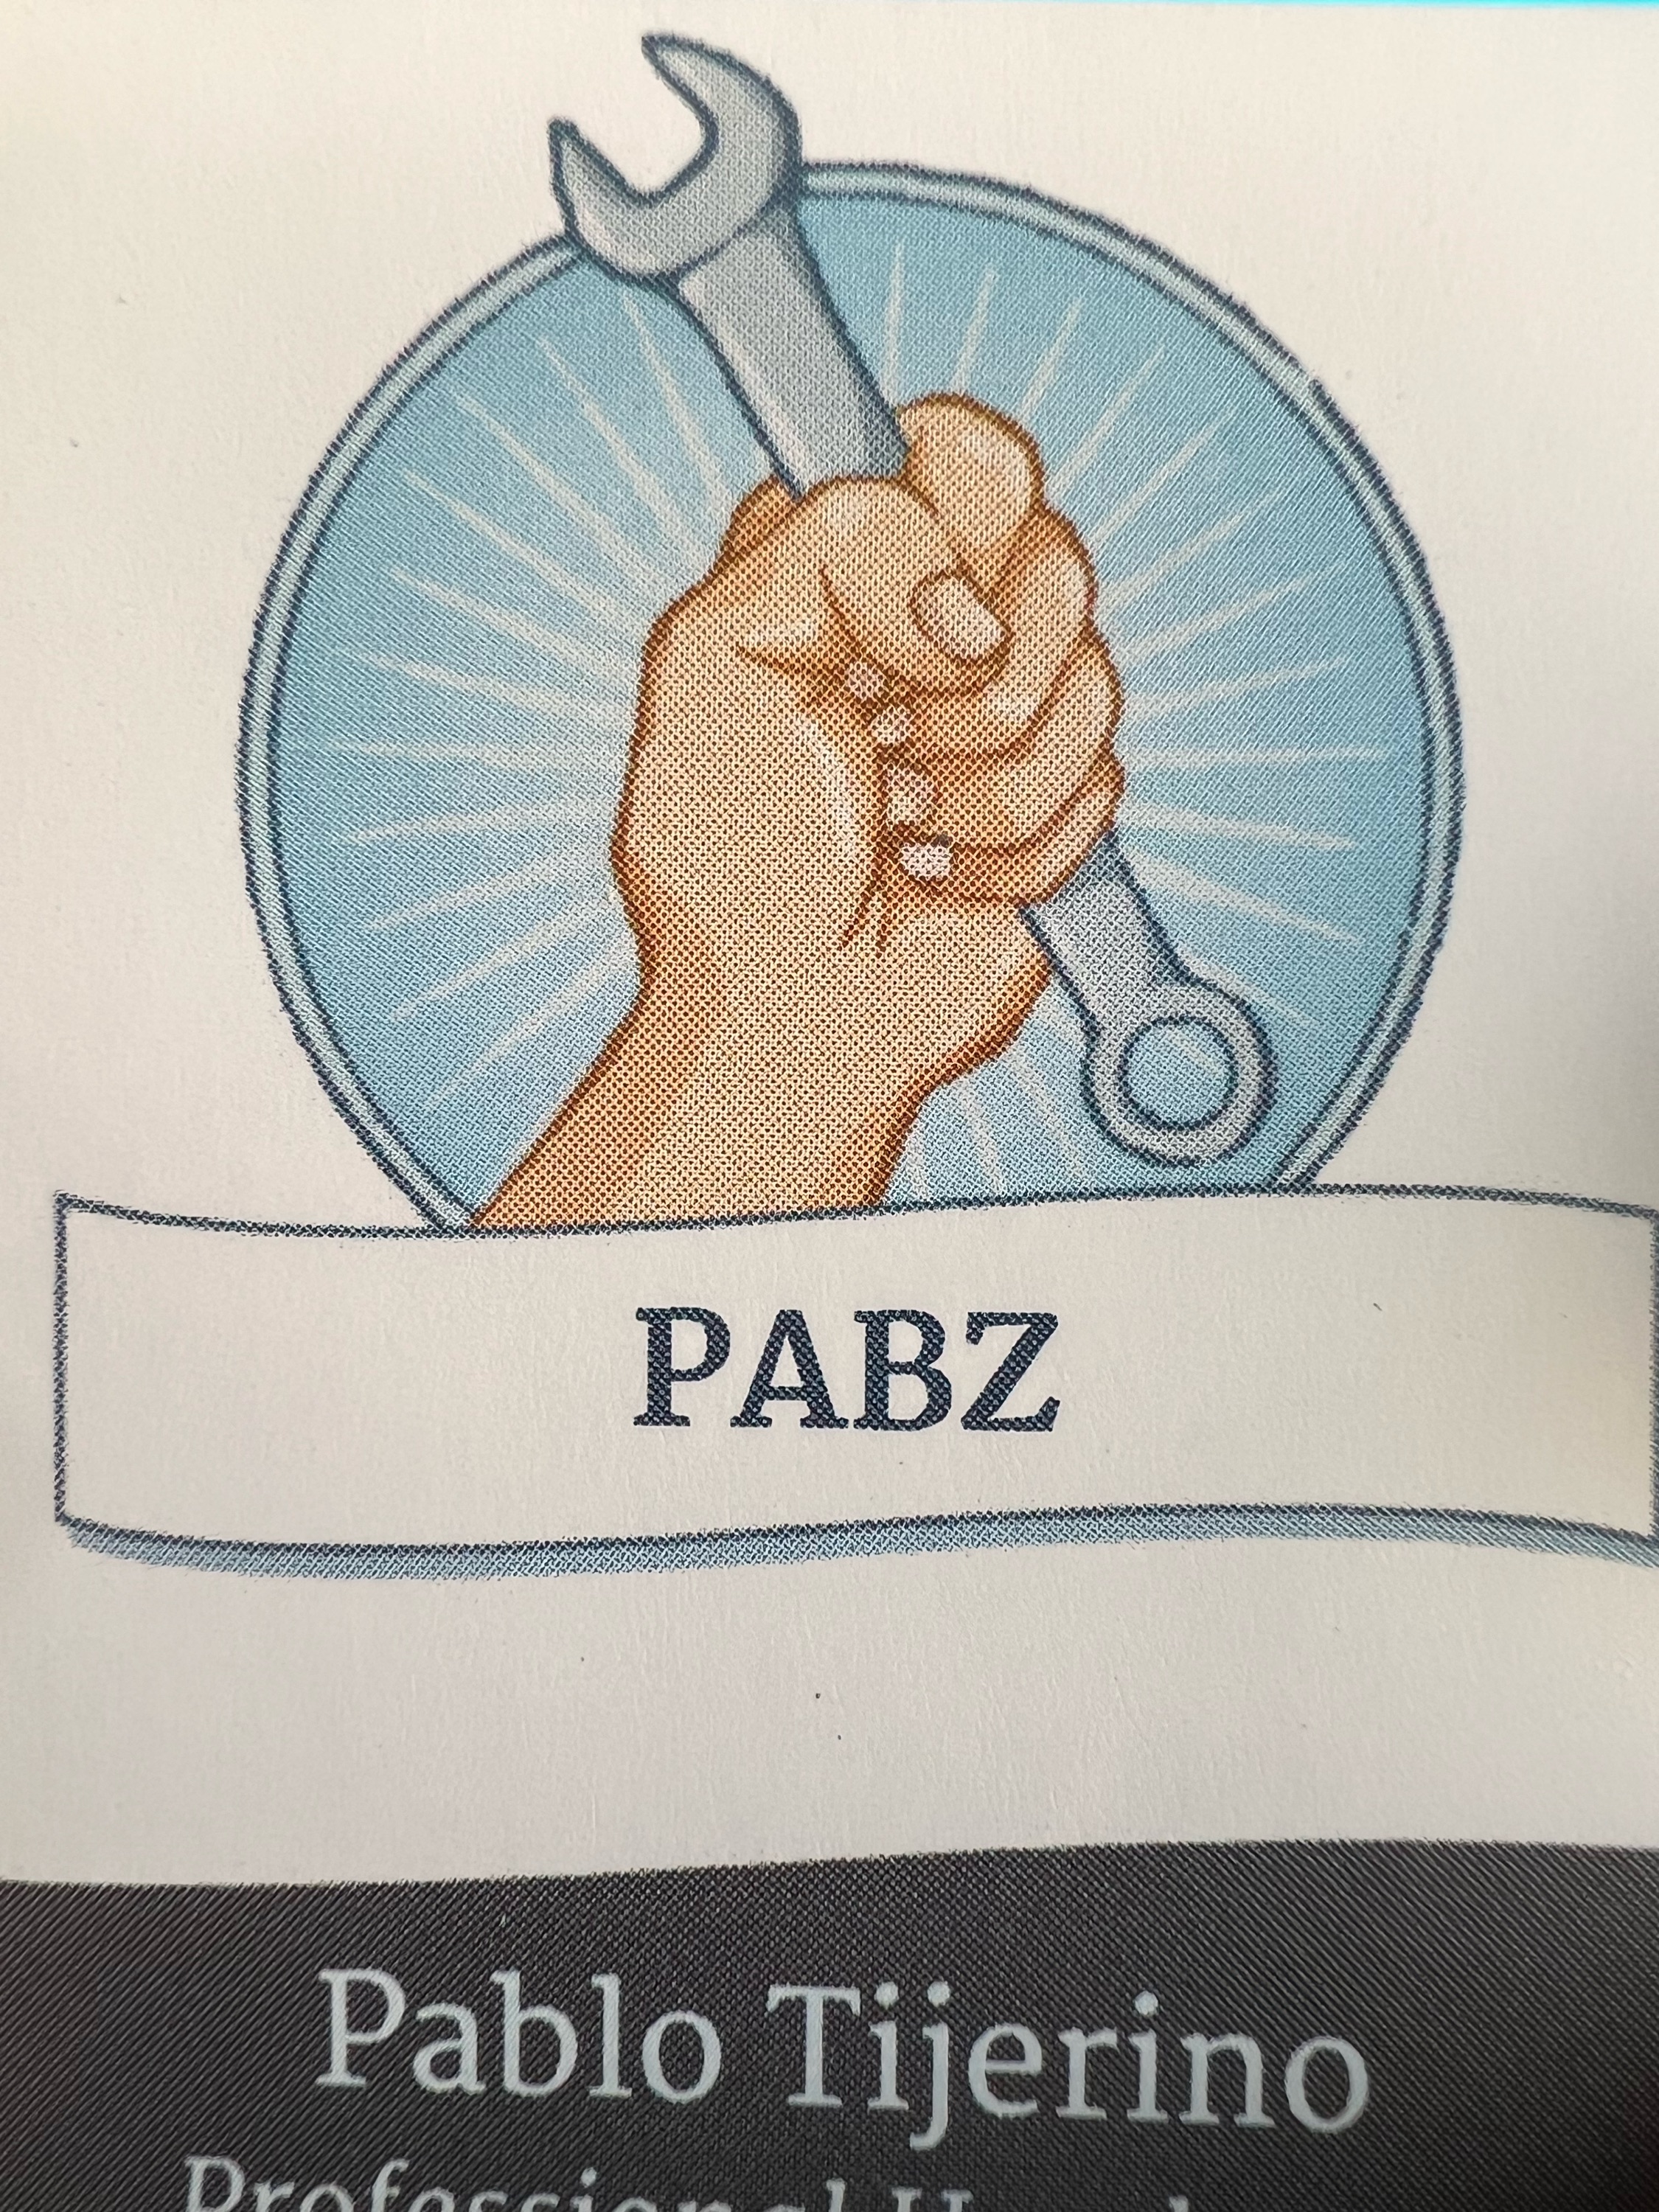 PABZ Professional Handymen Logo